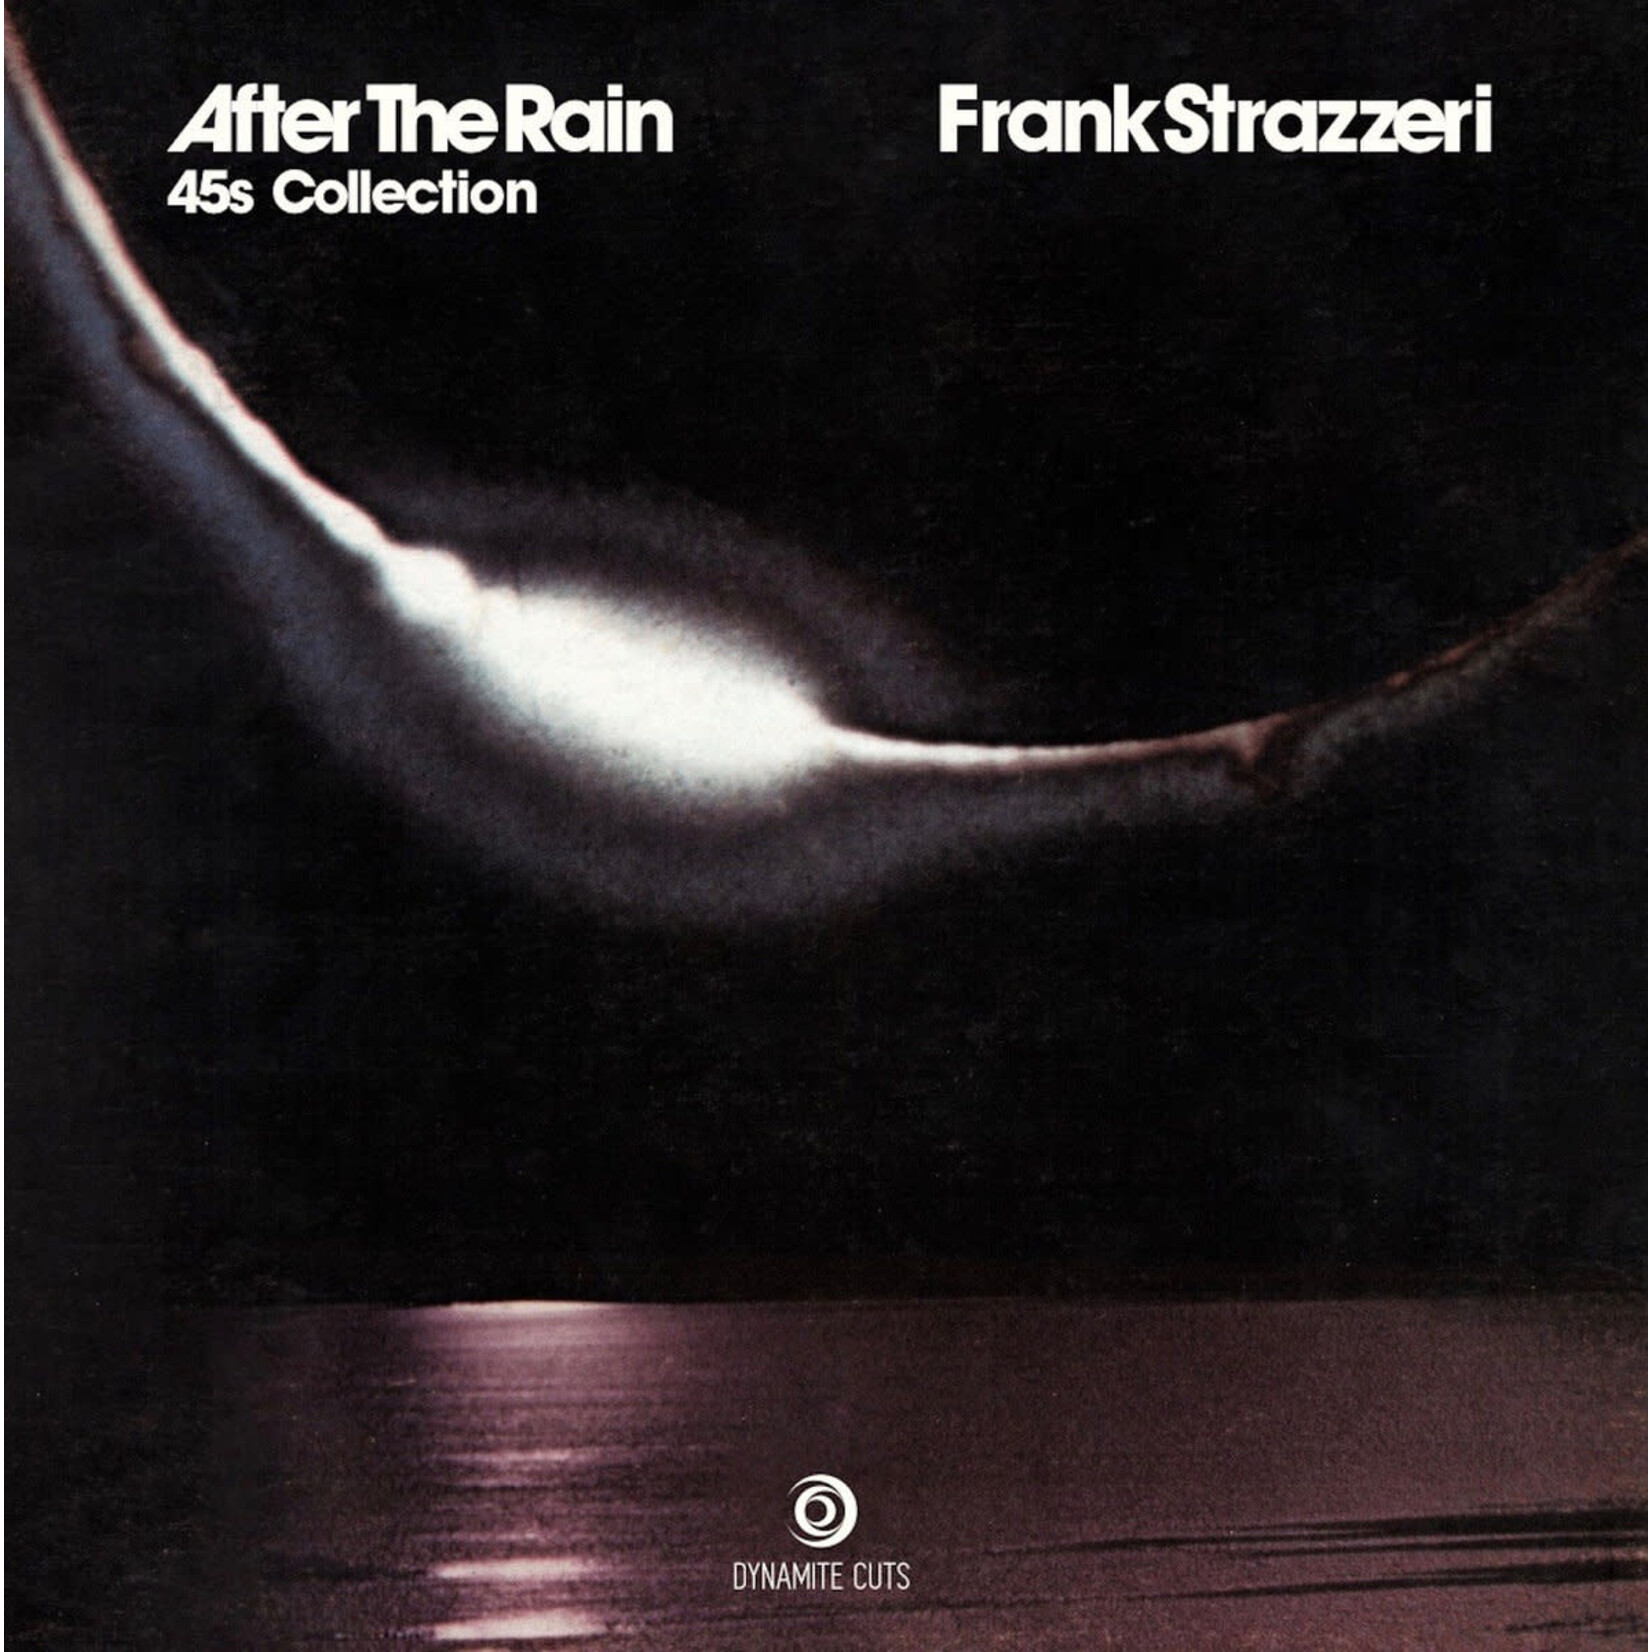 [New] Frank Strazzeri - After The Rain